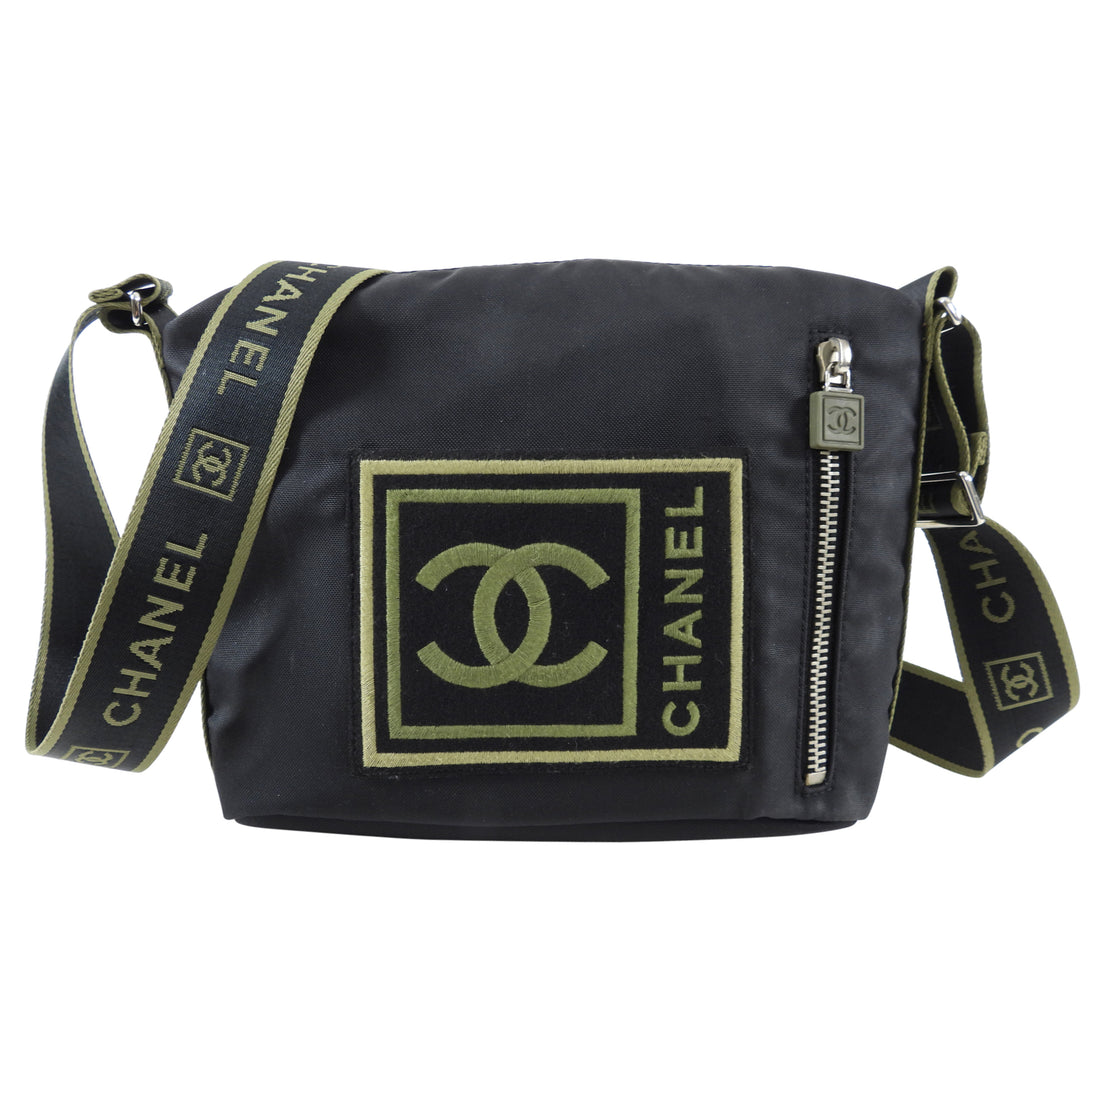 Chanel Sport Bag